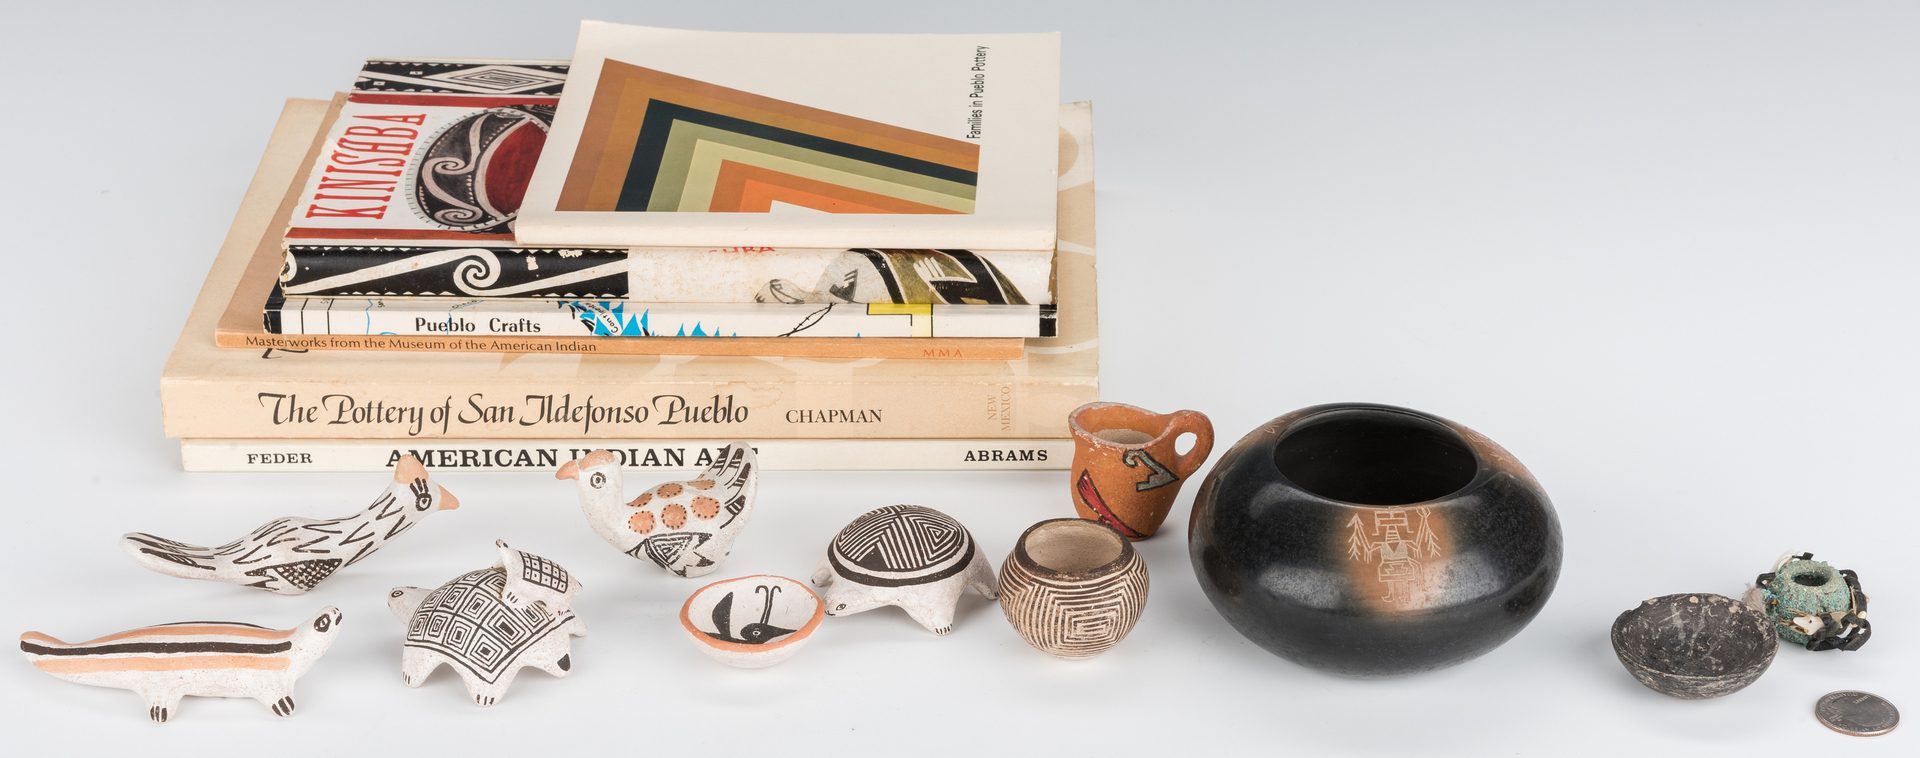 Lot 709: 11 Native American Pottery Pcs., inc. Miniatures & 6 Books, 17 pcs. total